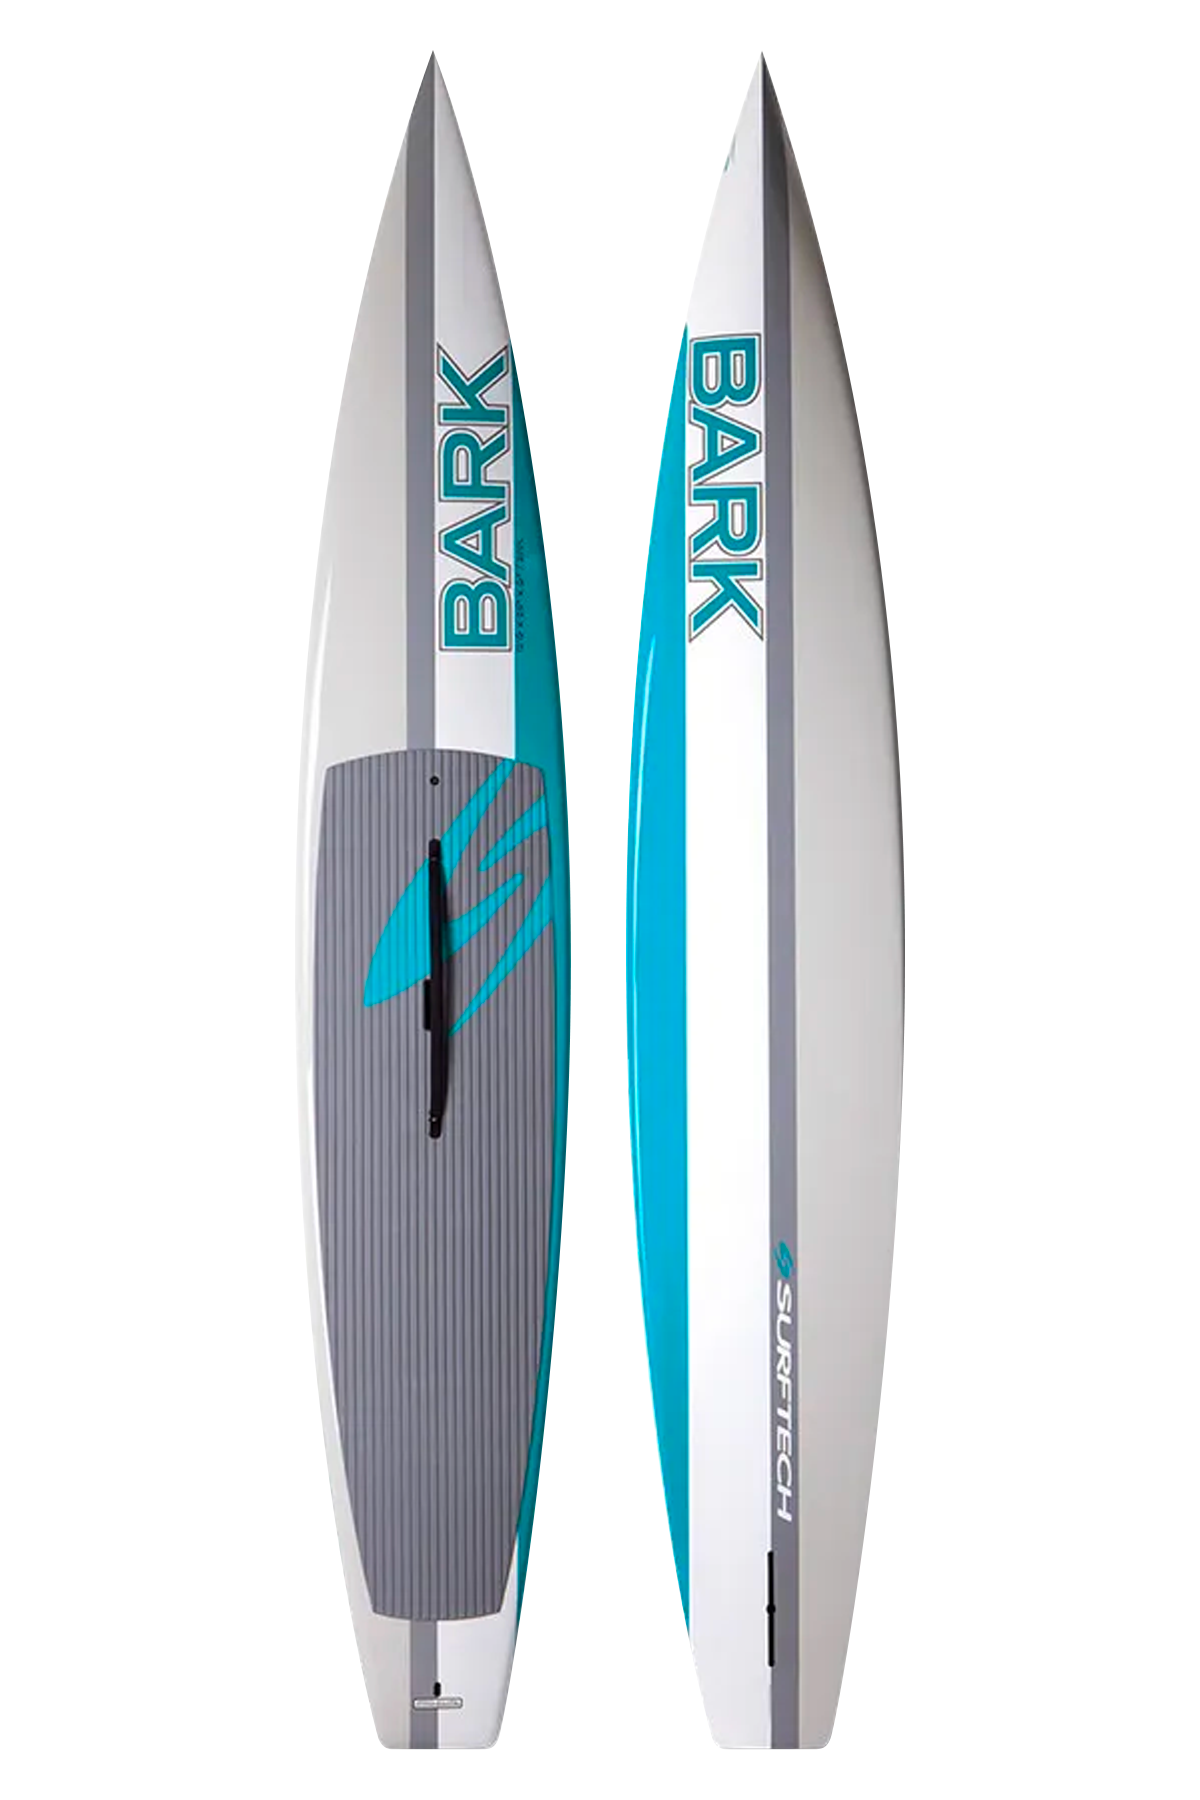 12 6 SURFTECH SUP CONTENDER RACE - BARK ELITE  - 25